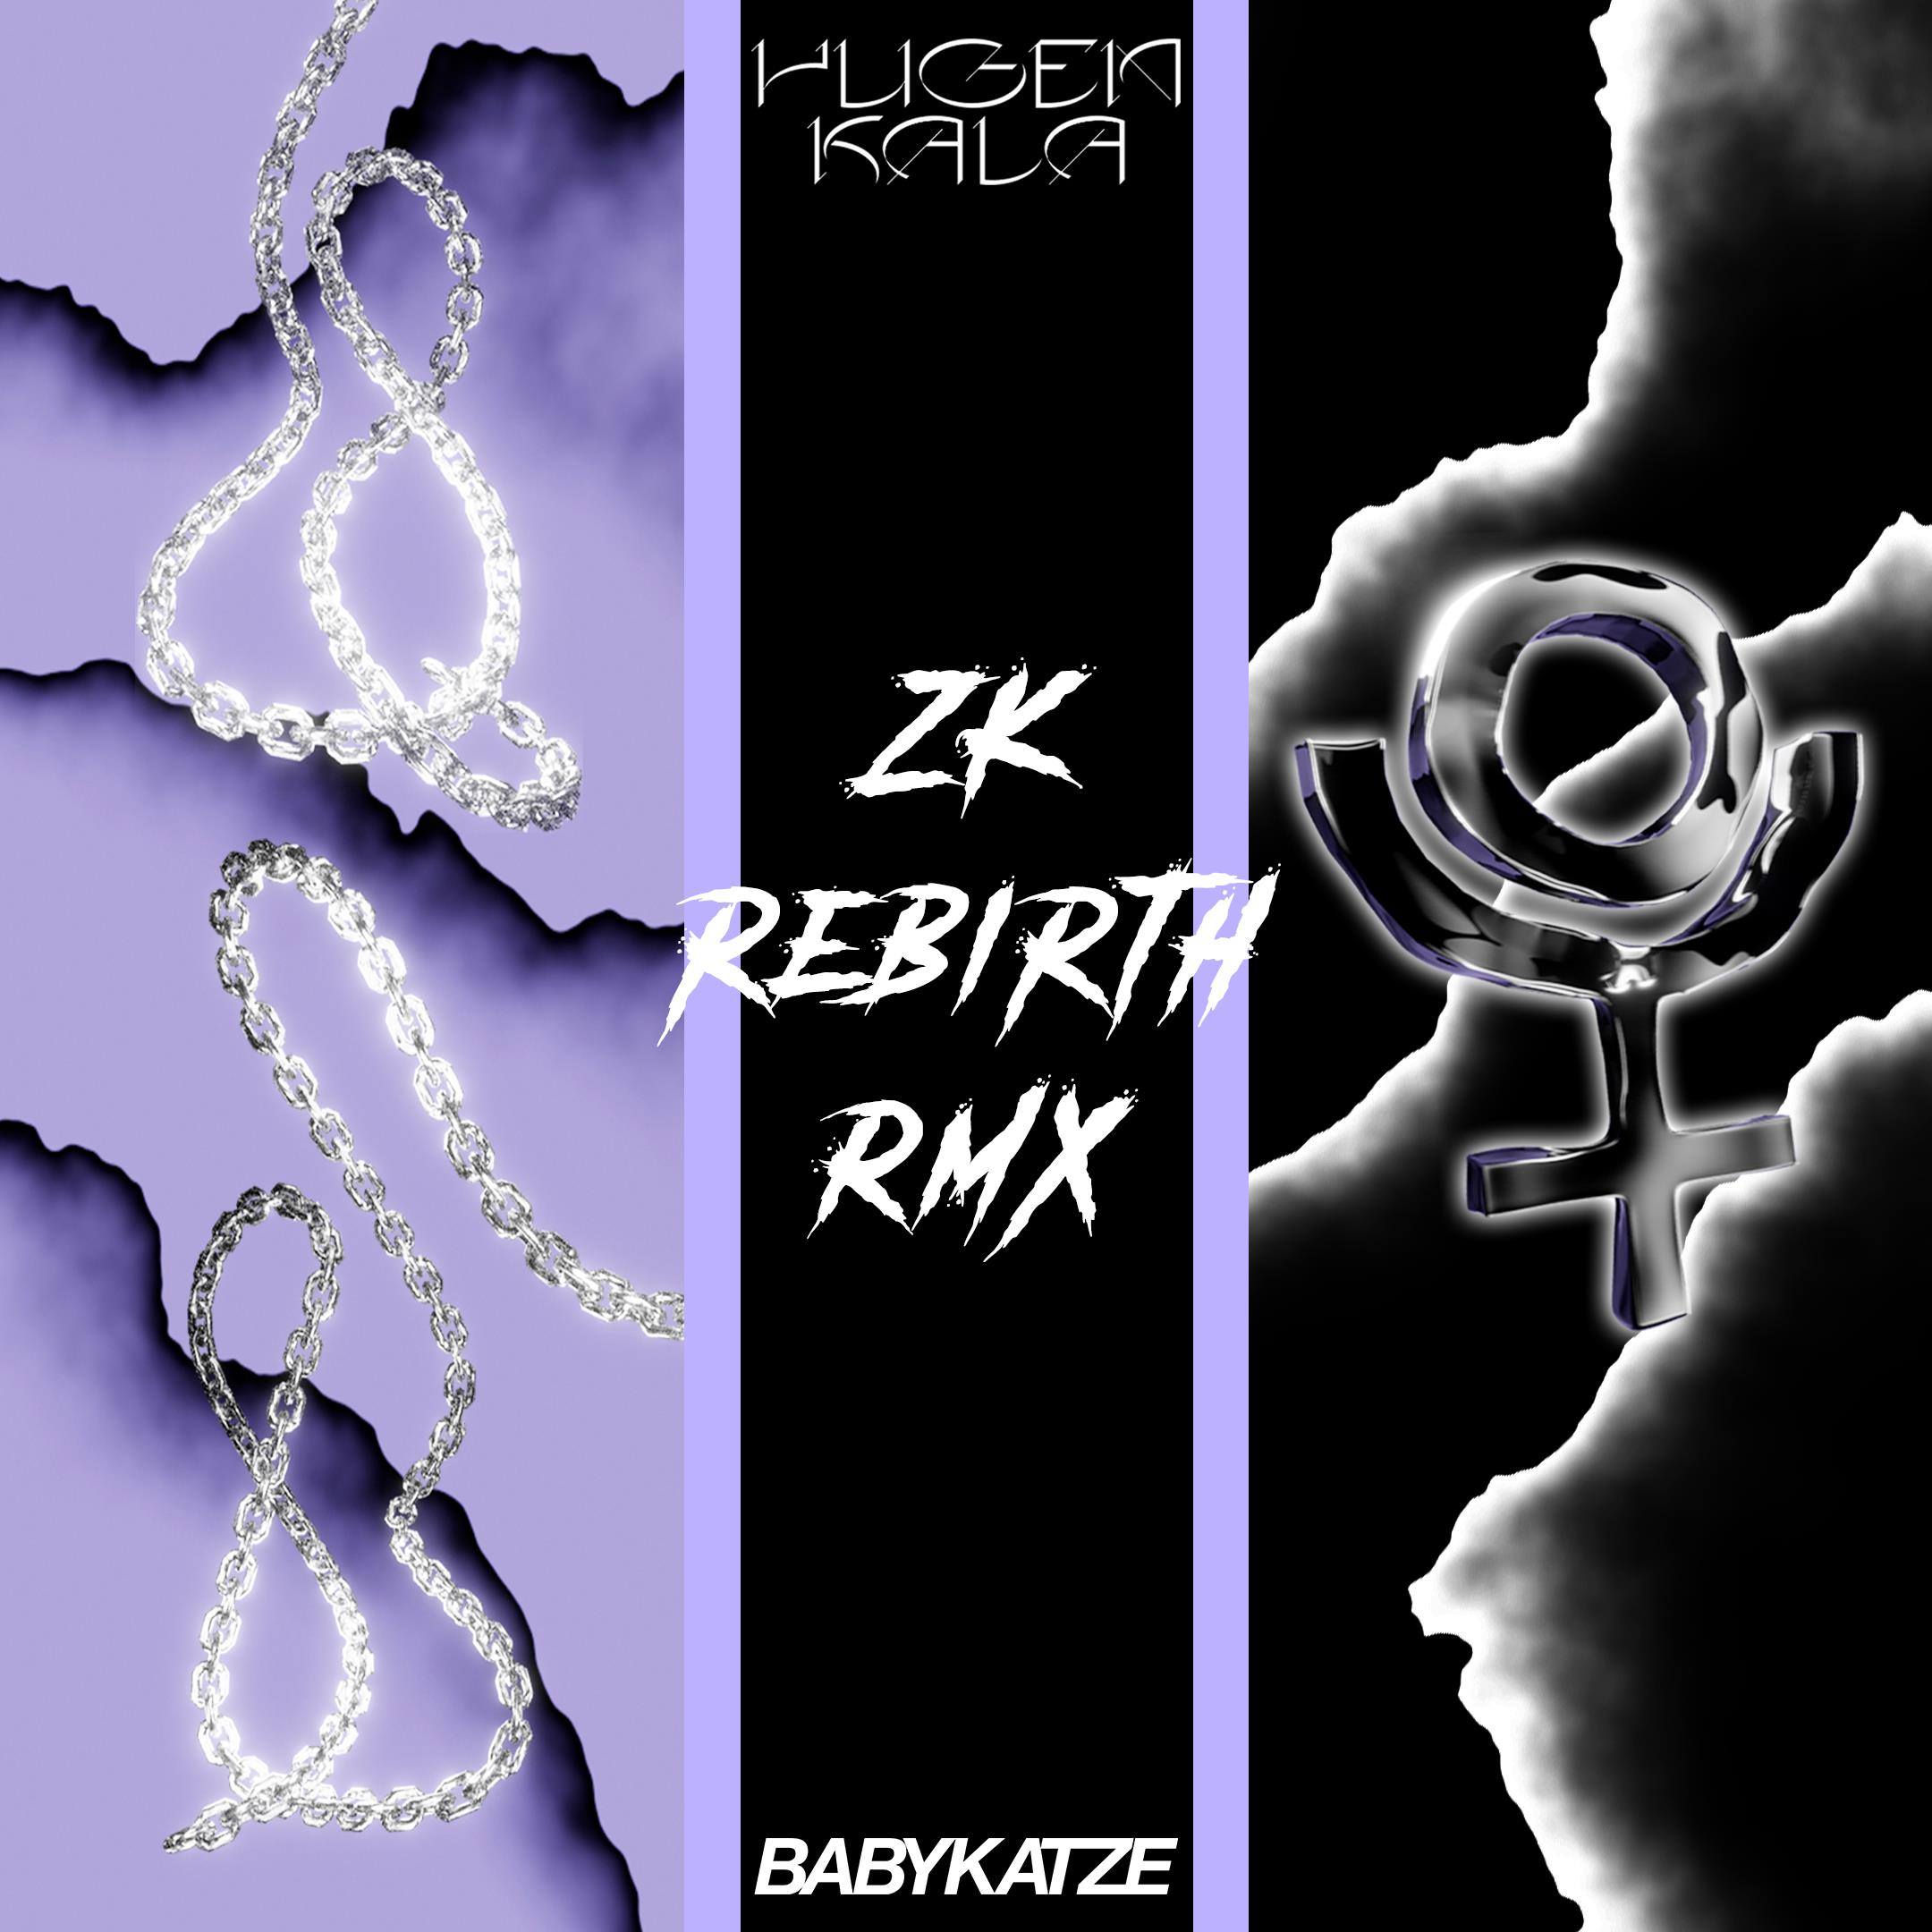 ZK Rebirth RMX (Yugen Kala Remix)